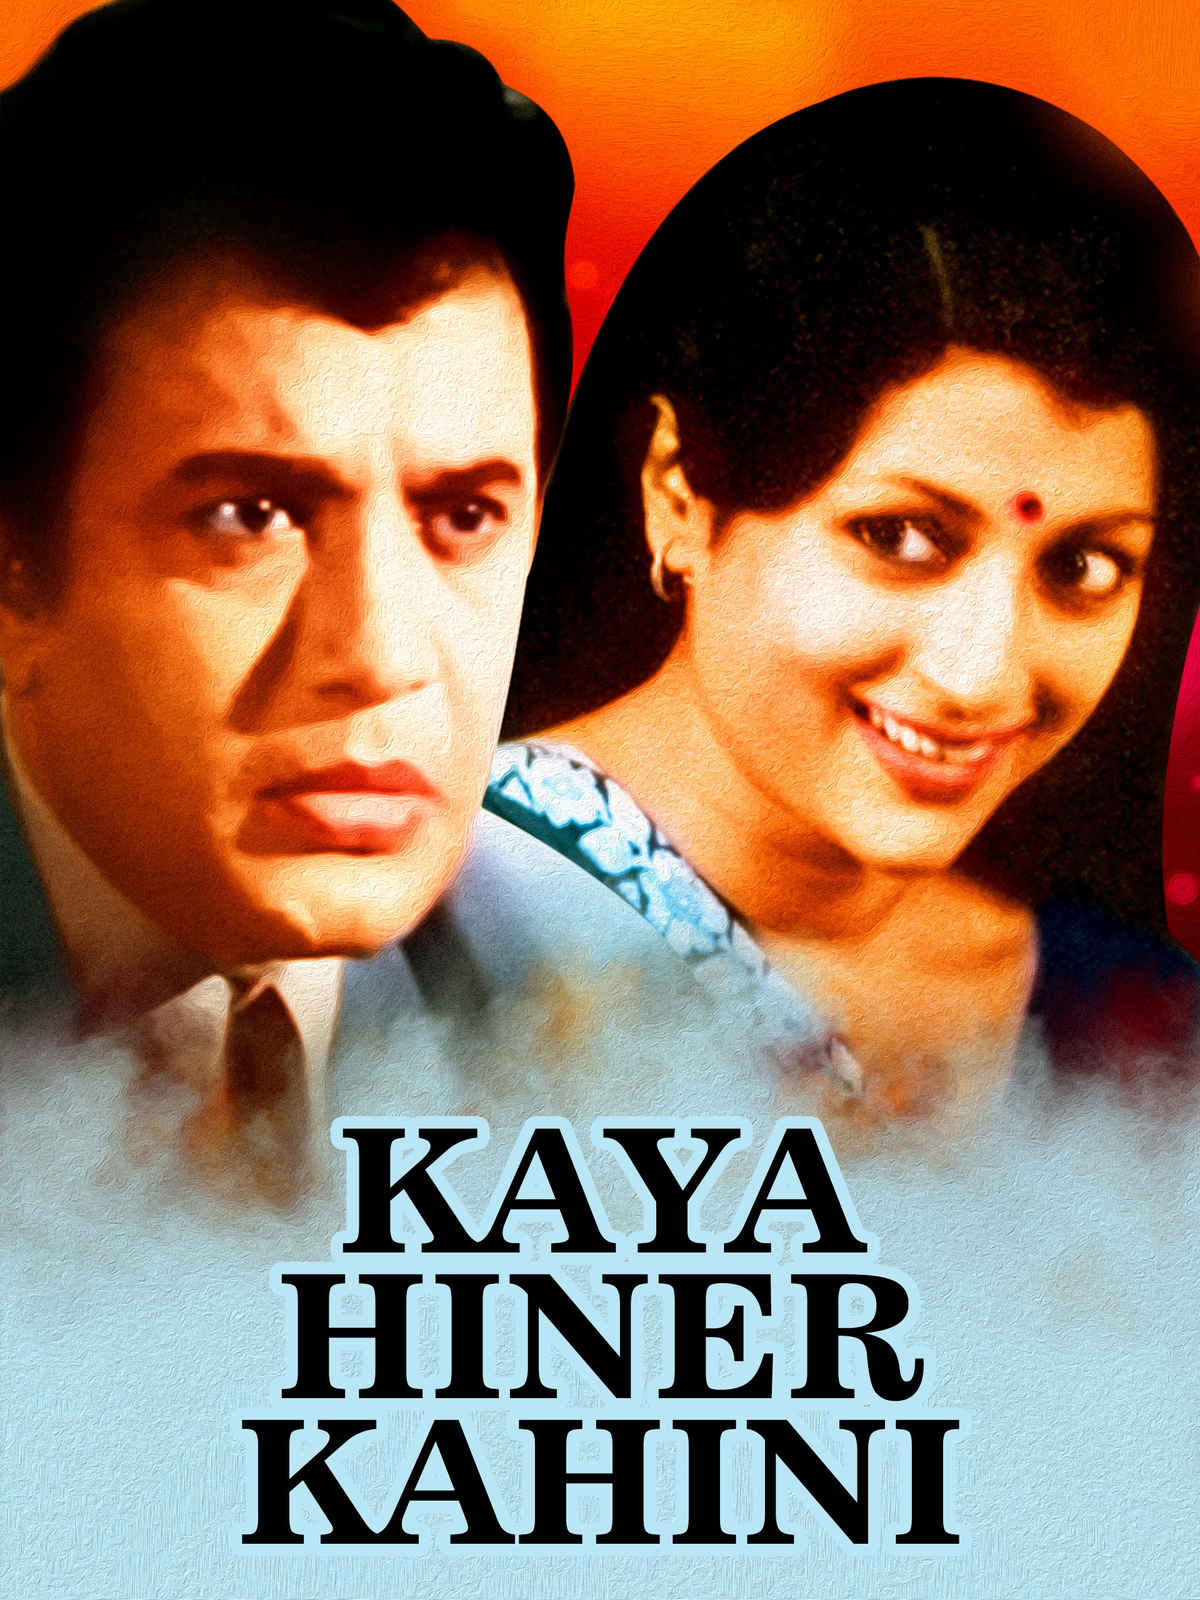 Kaya Hiner Kahini